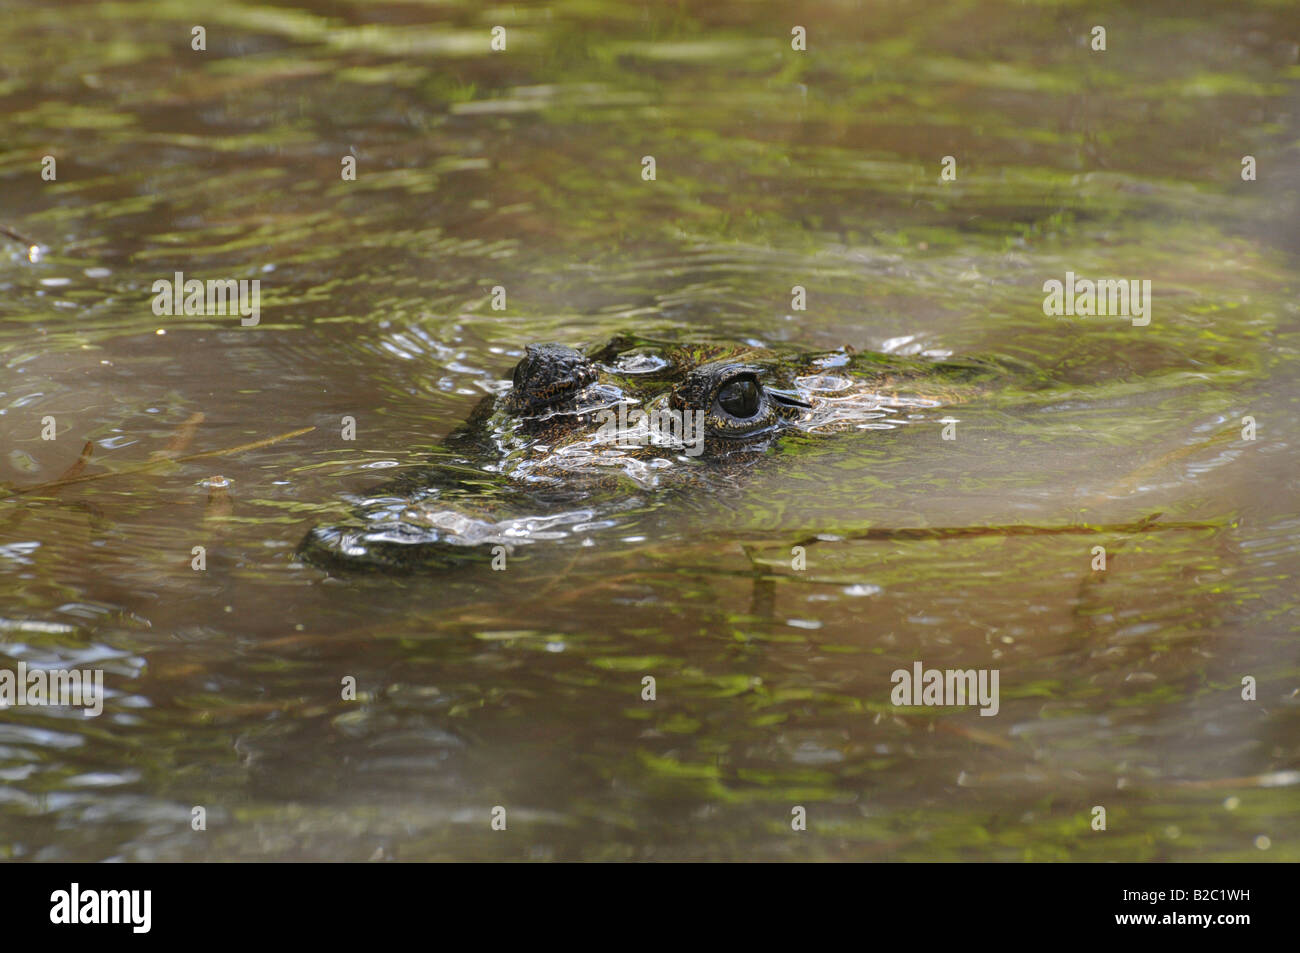 Crocodile (Crocodilia) snout peeking from water's surface, Lamanai, Belize, Central America Stock Photo